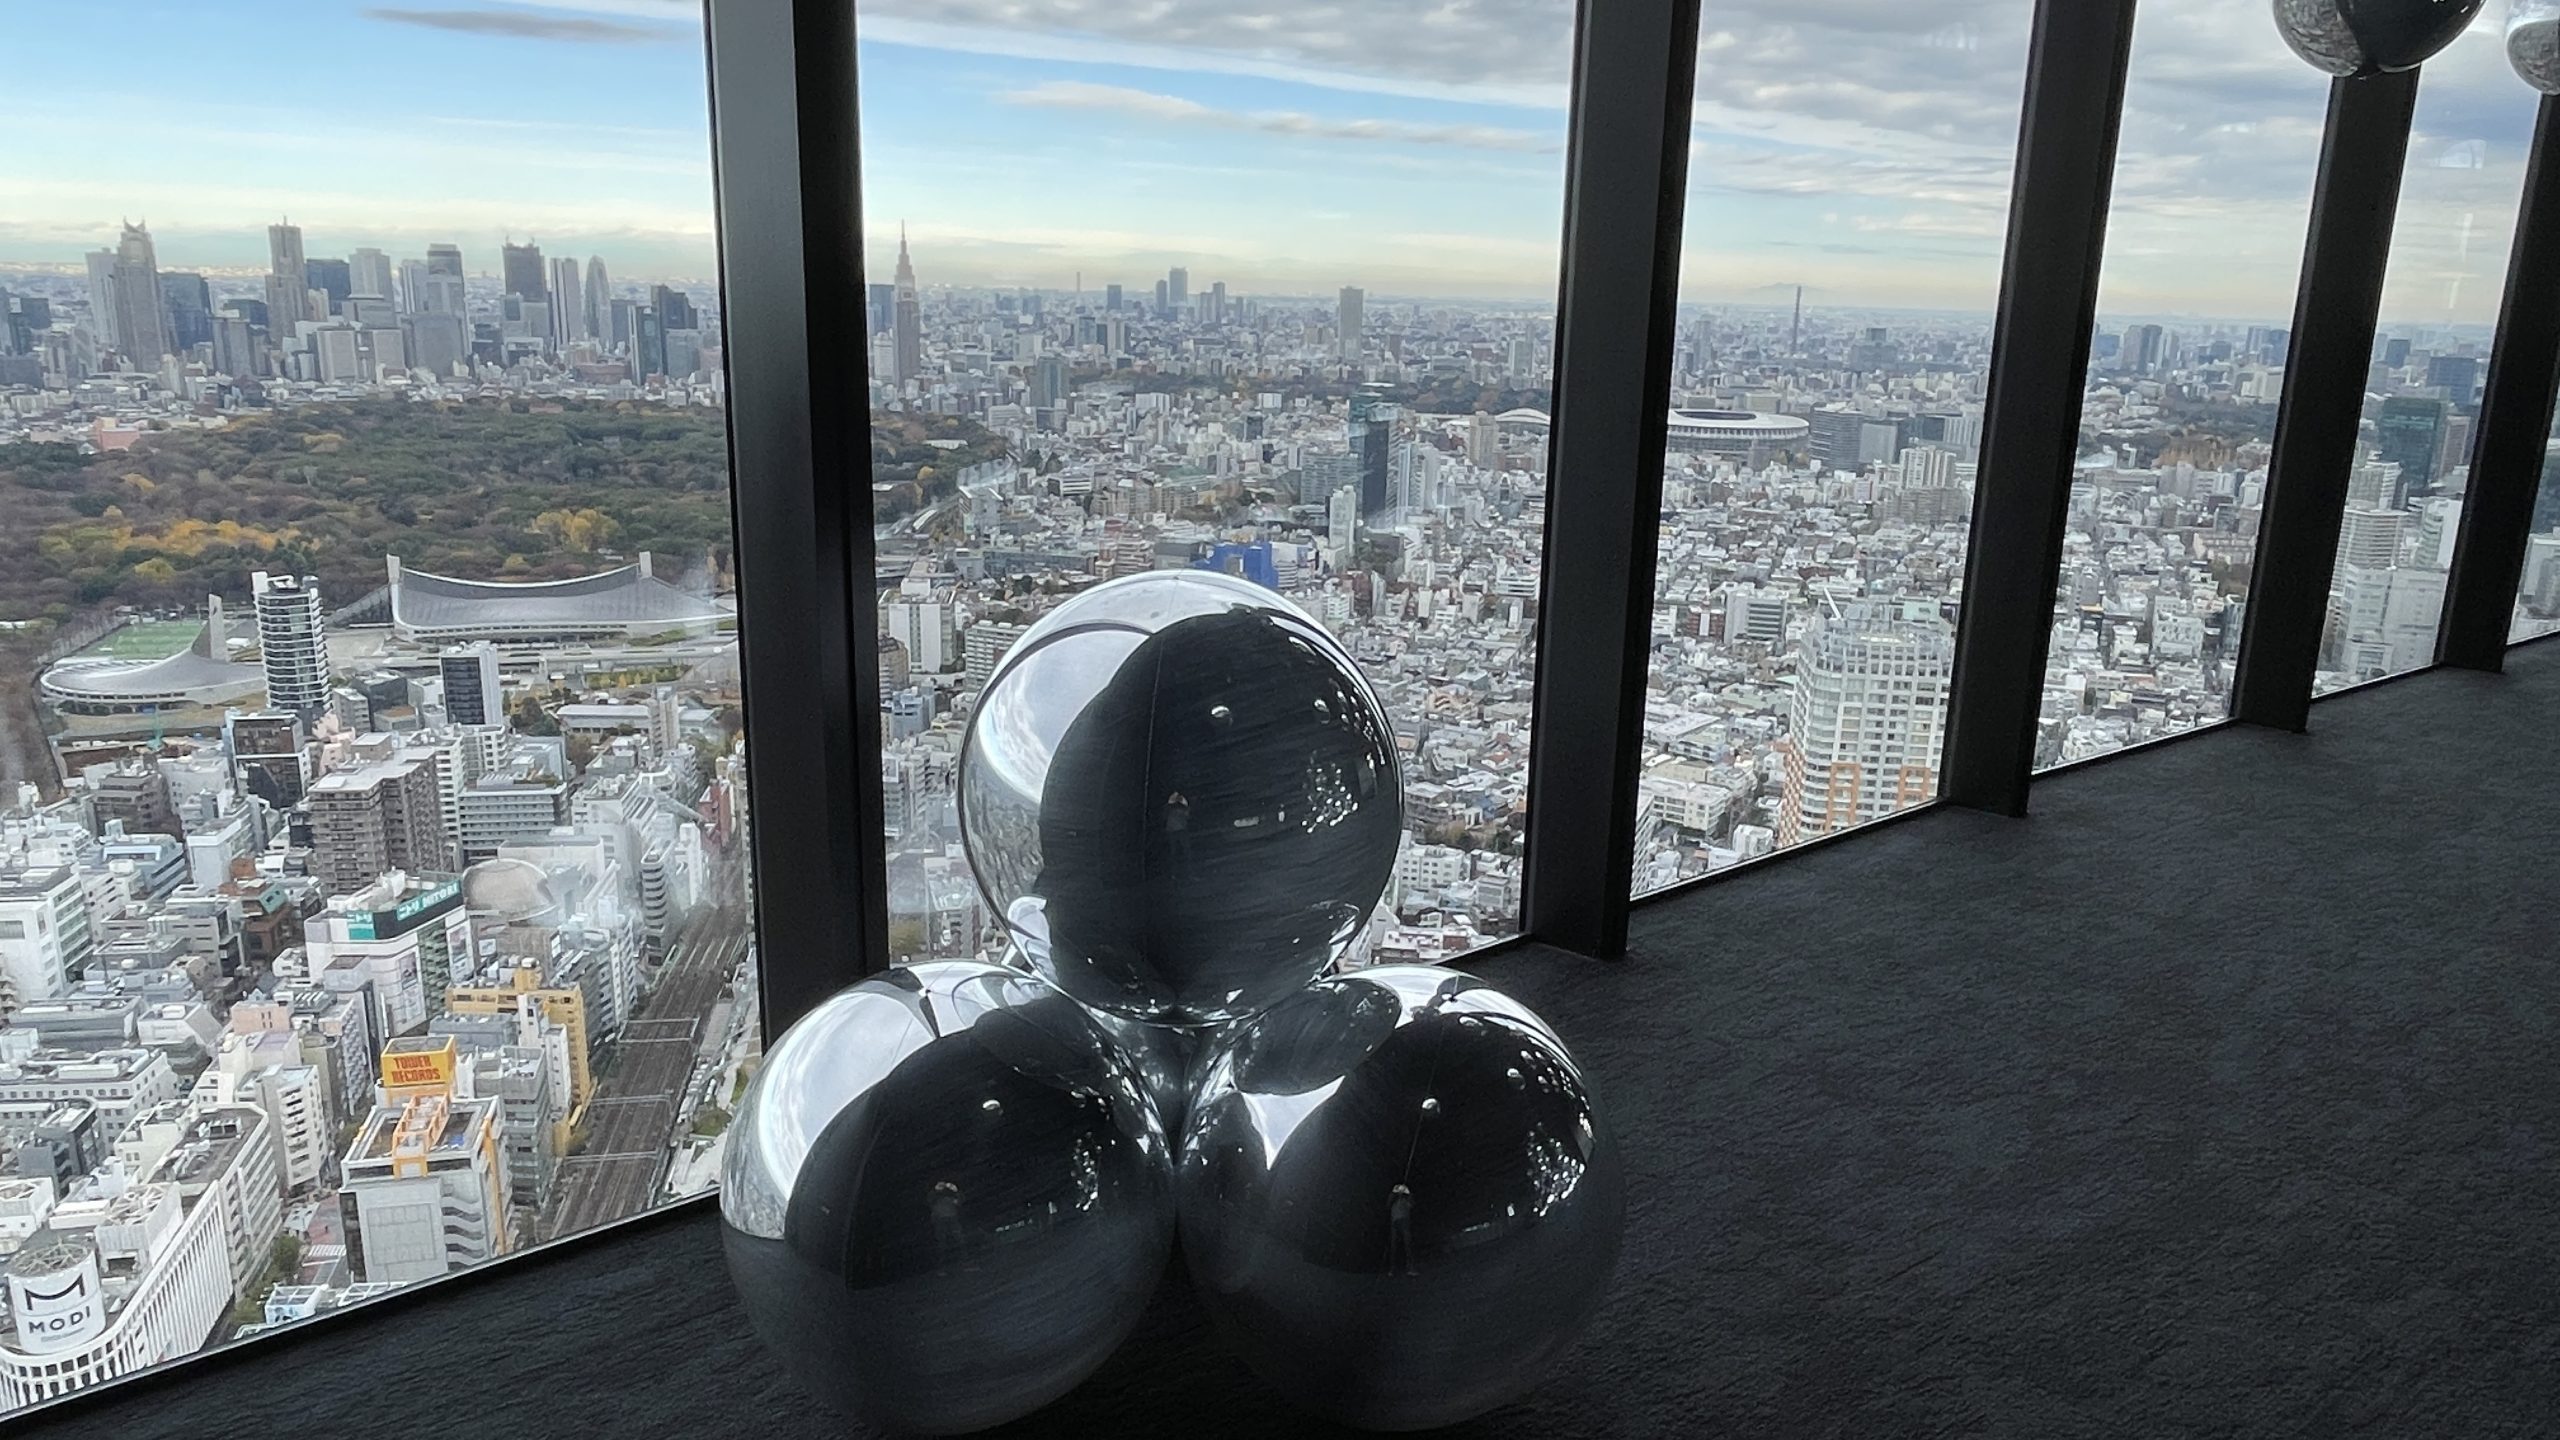 Shibuya Sky balloons near window with city views